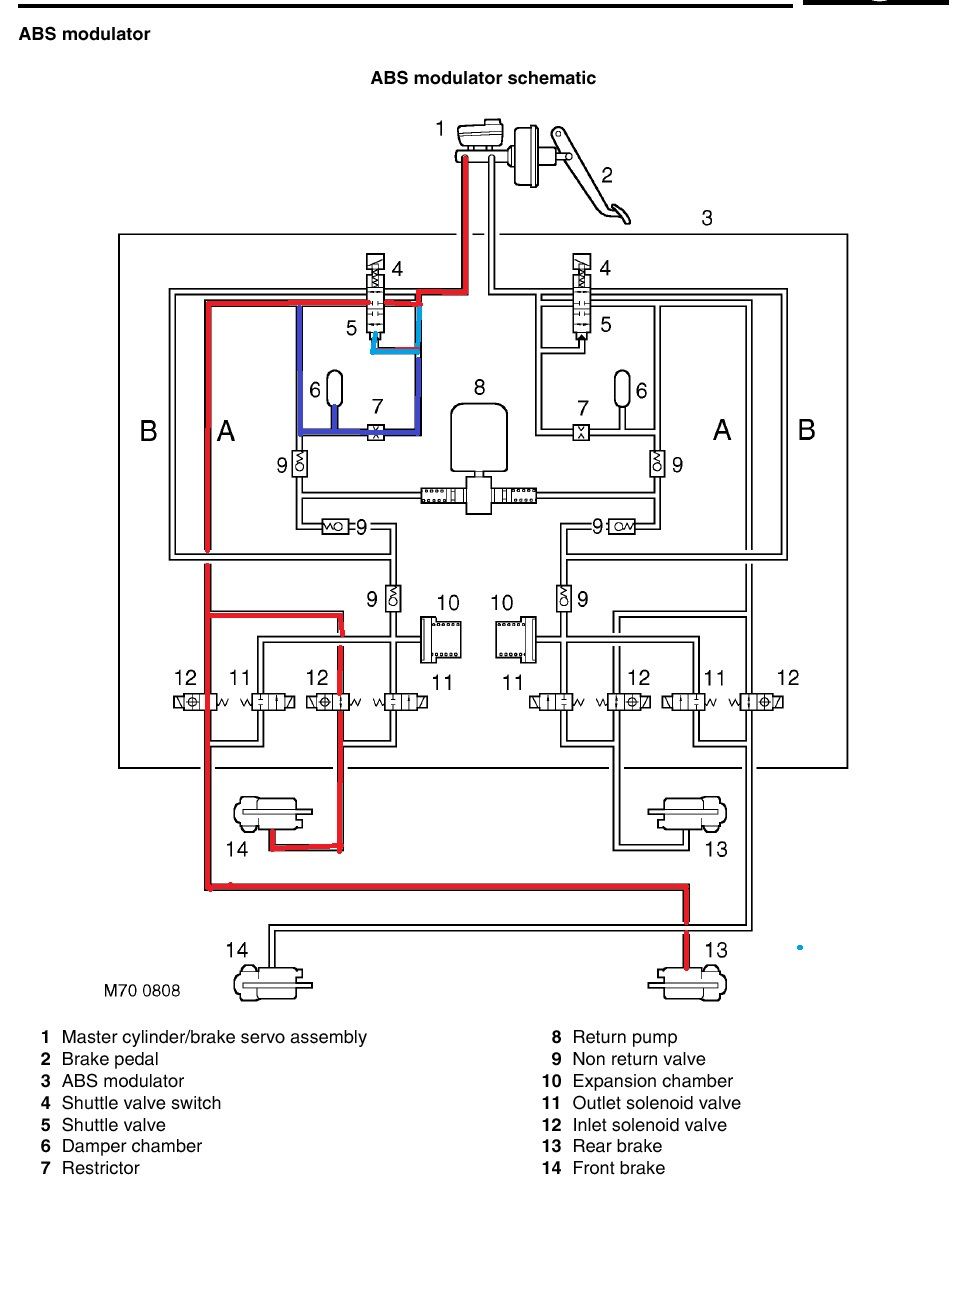 WABCO modulator 1 flow scheme.jpg